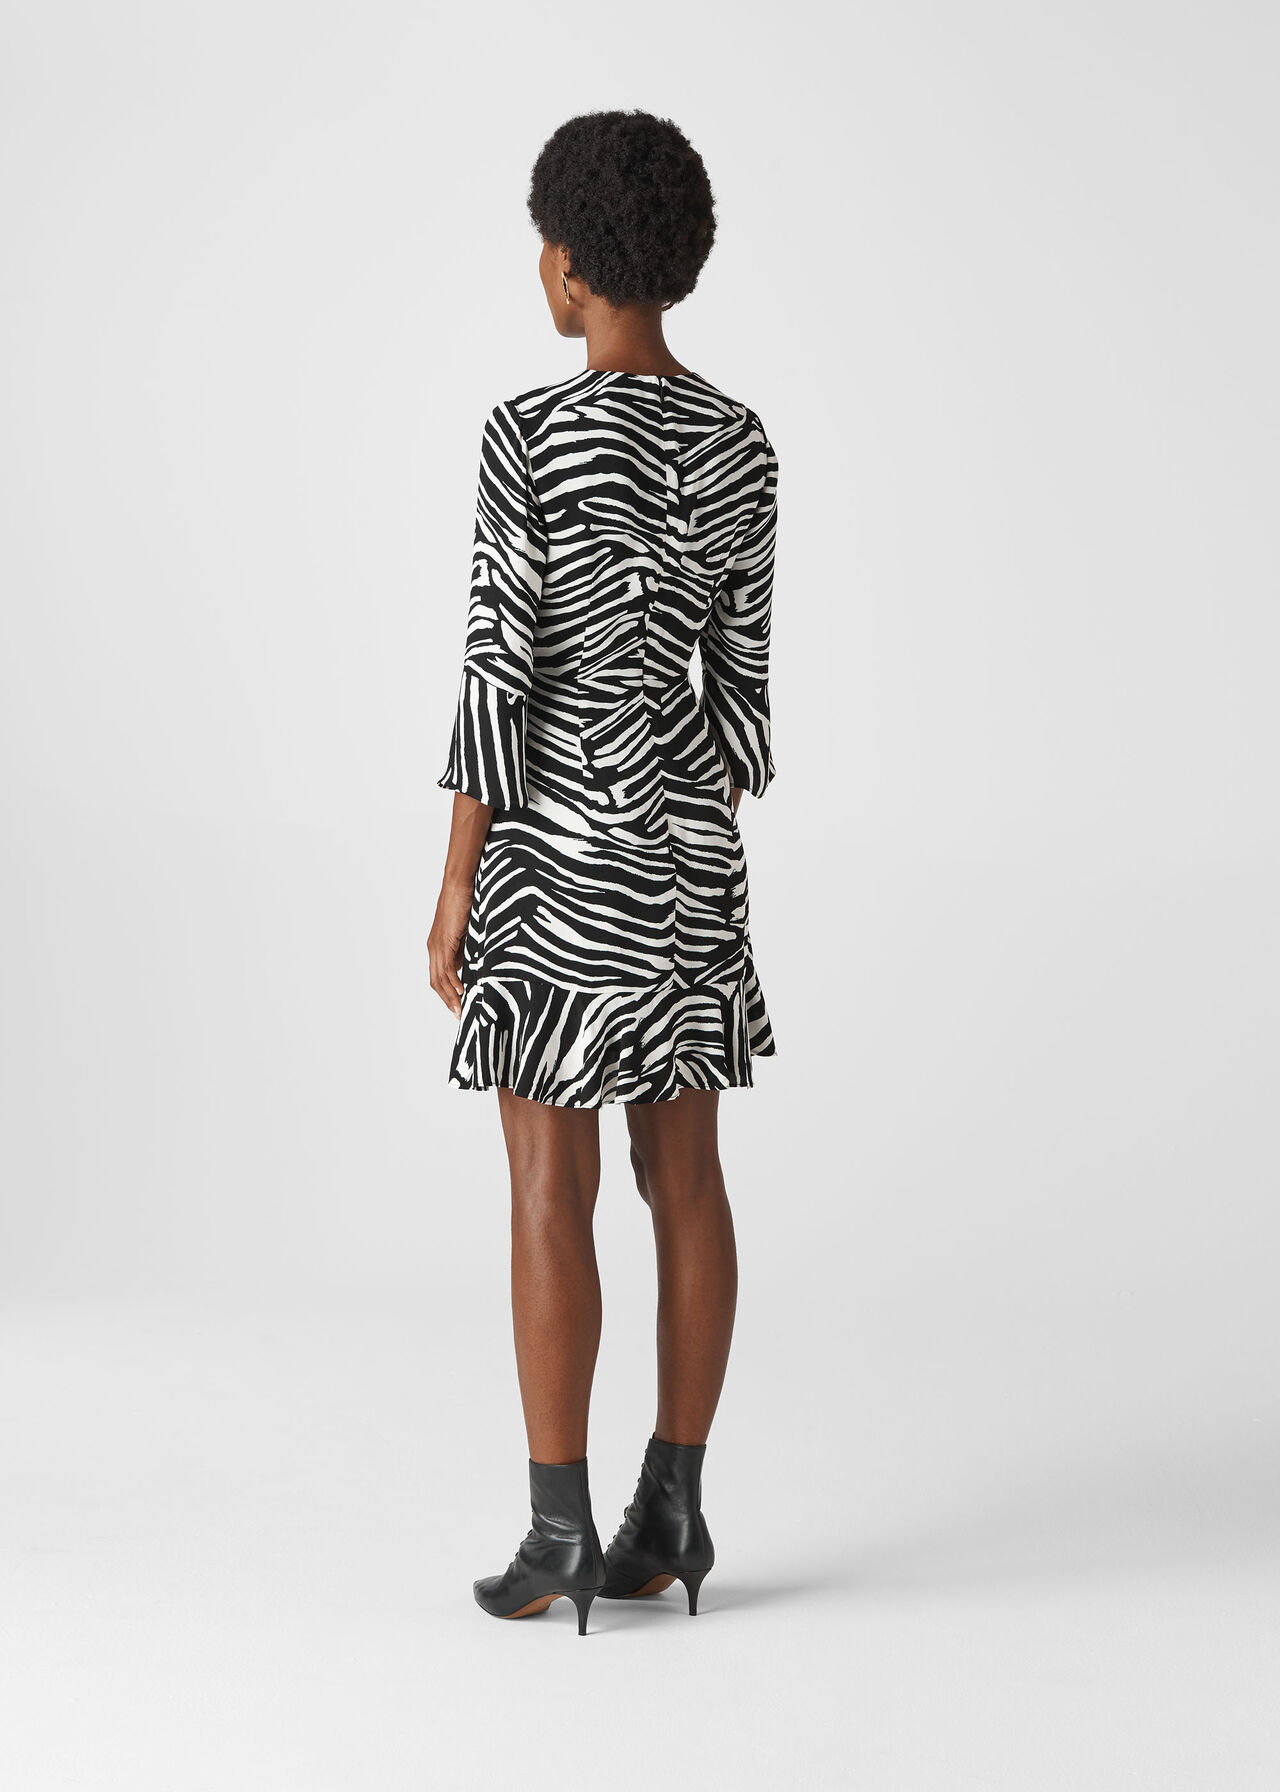 Zebra Print Flippy Dress Black/White